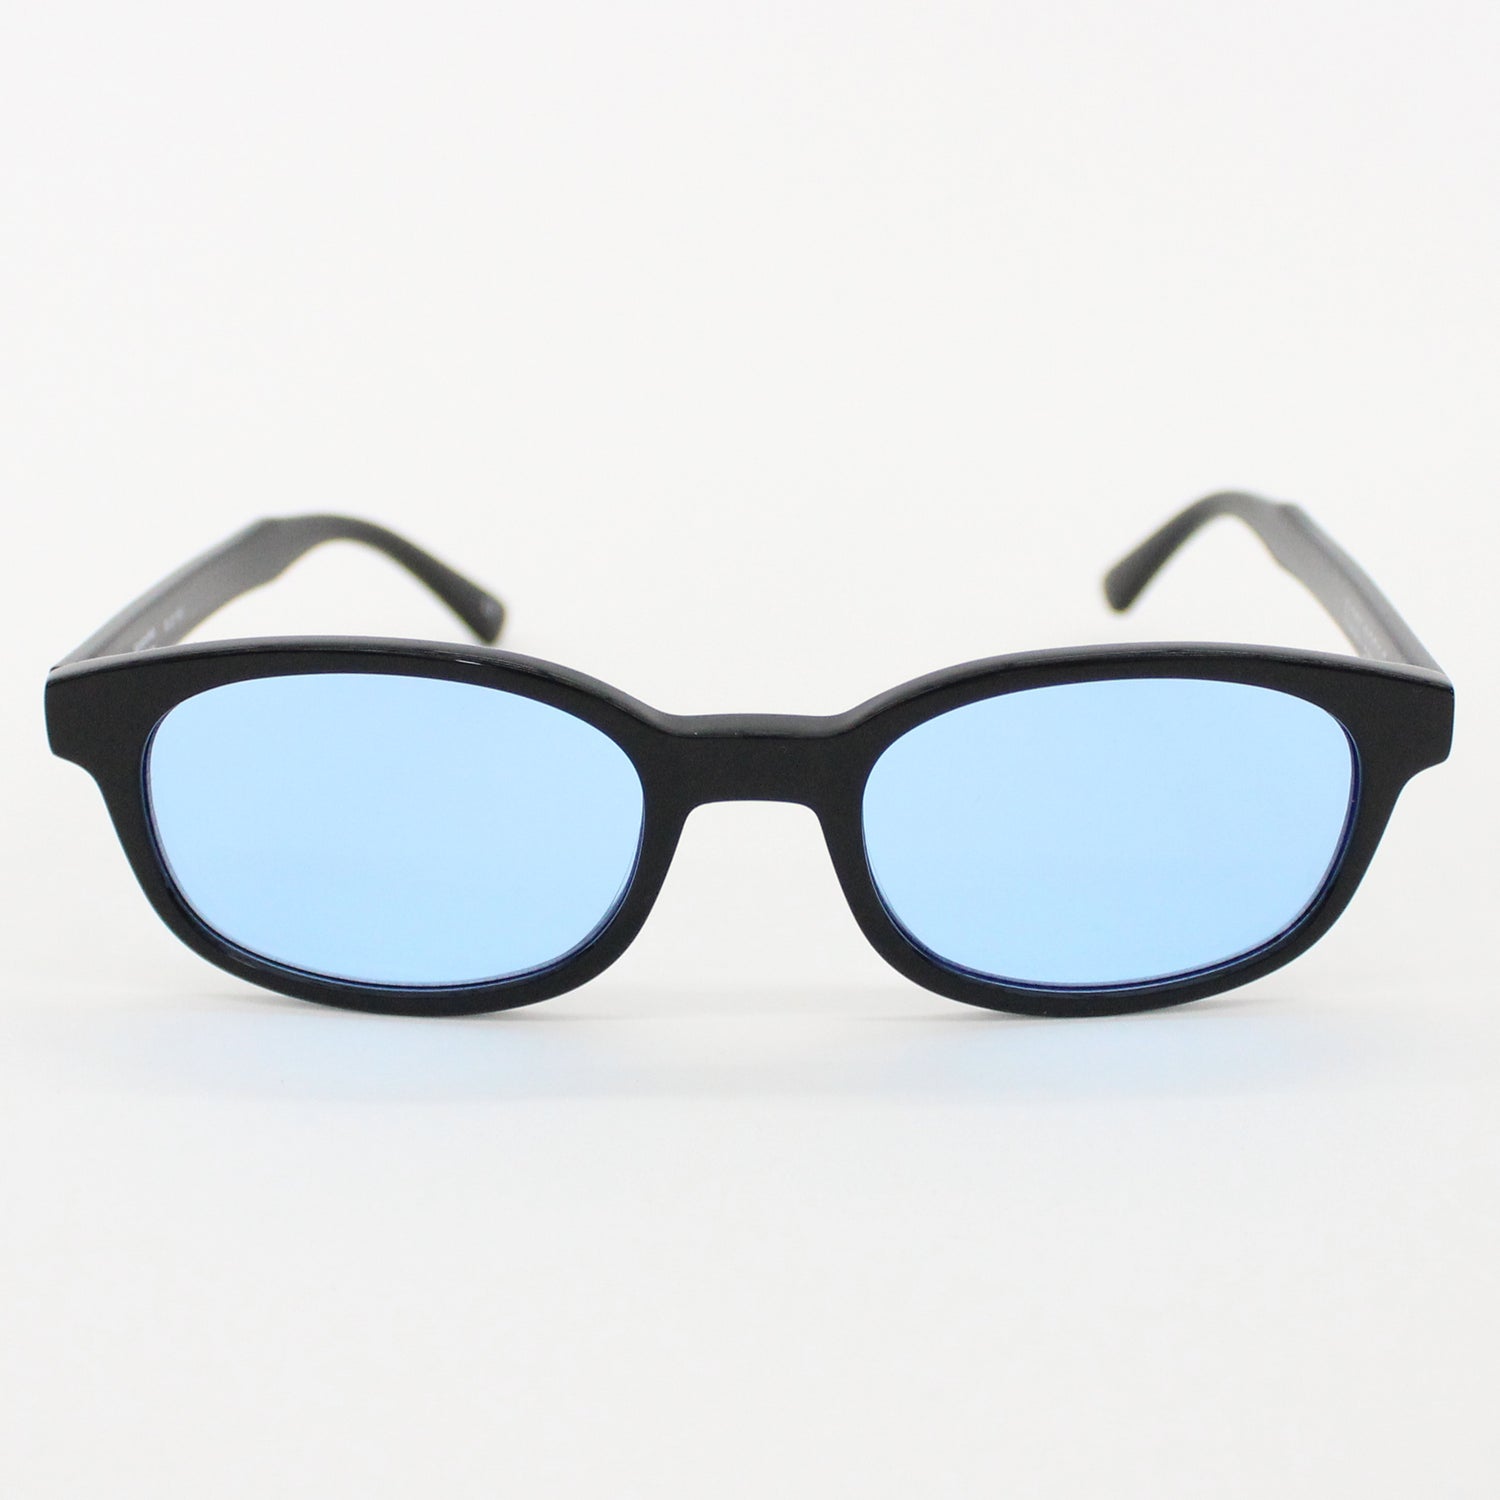 Unibase Glasses - Blue